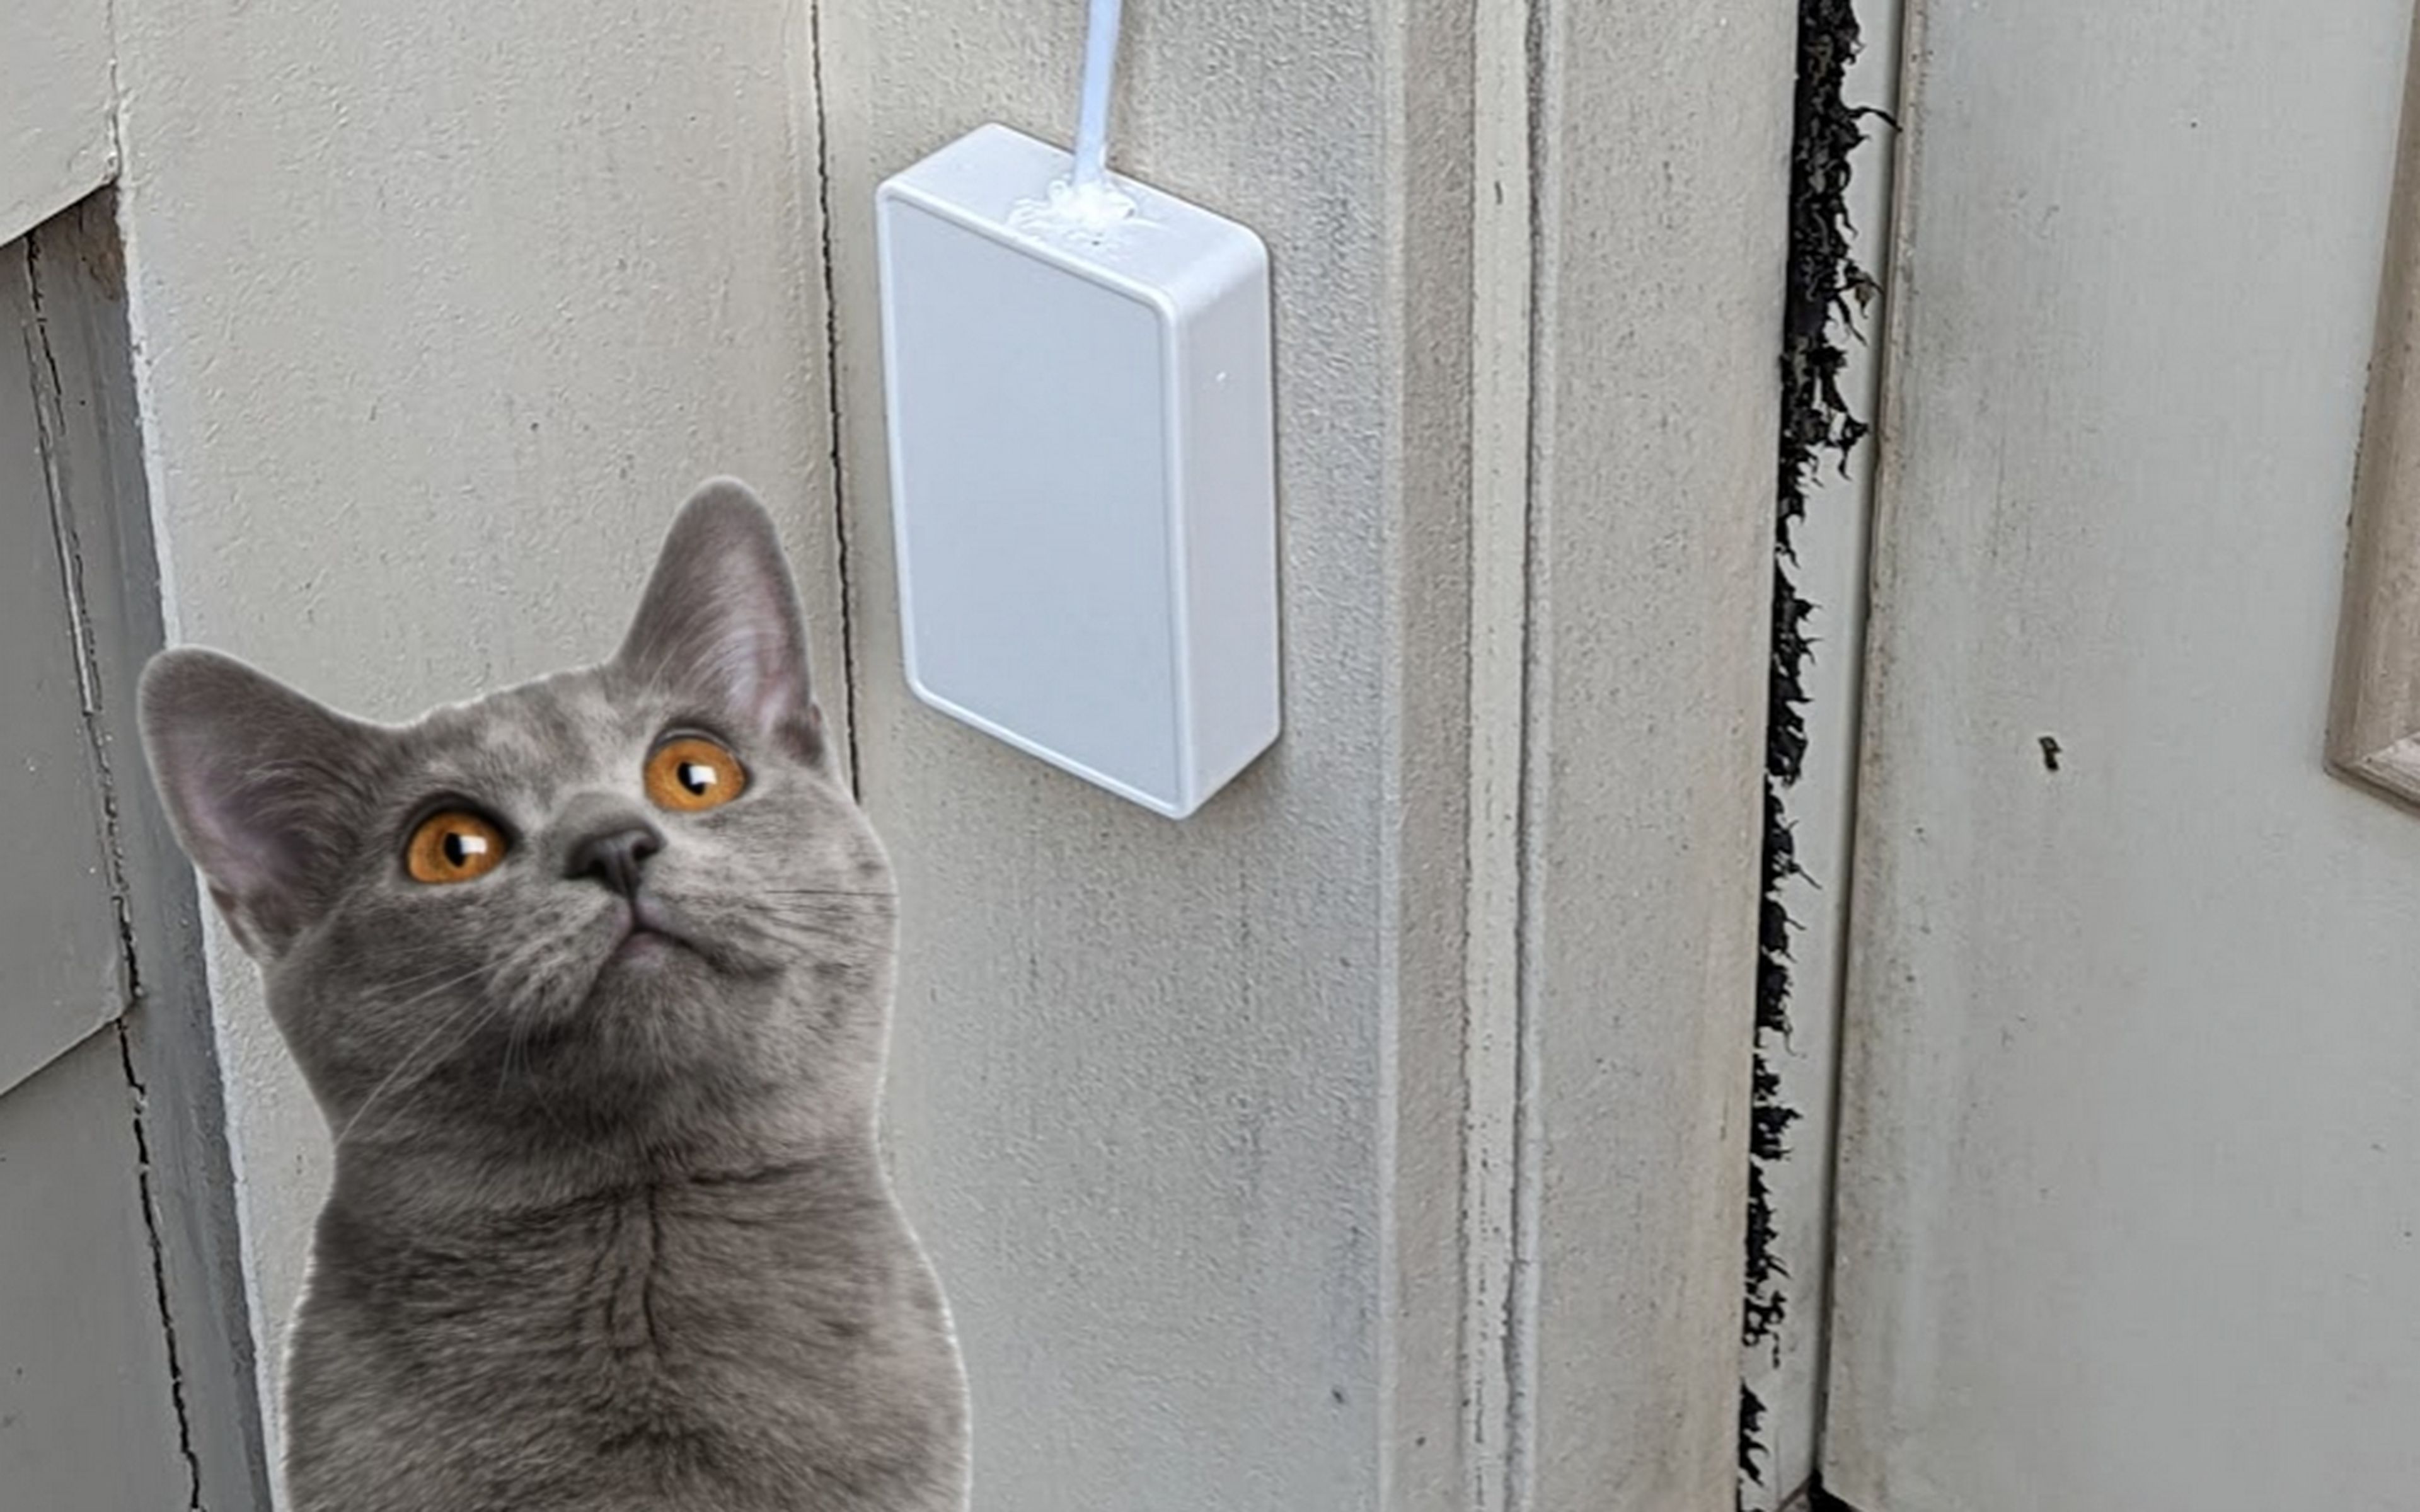 Inventan un timbre para gatos con una Raspberry Pi que solo abre